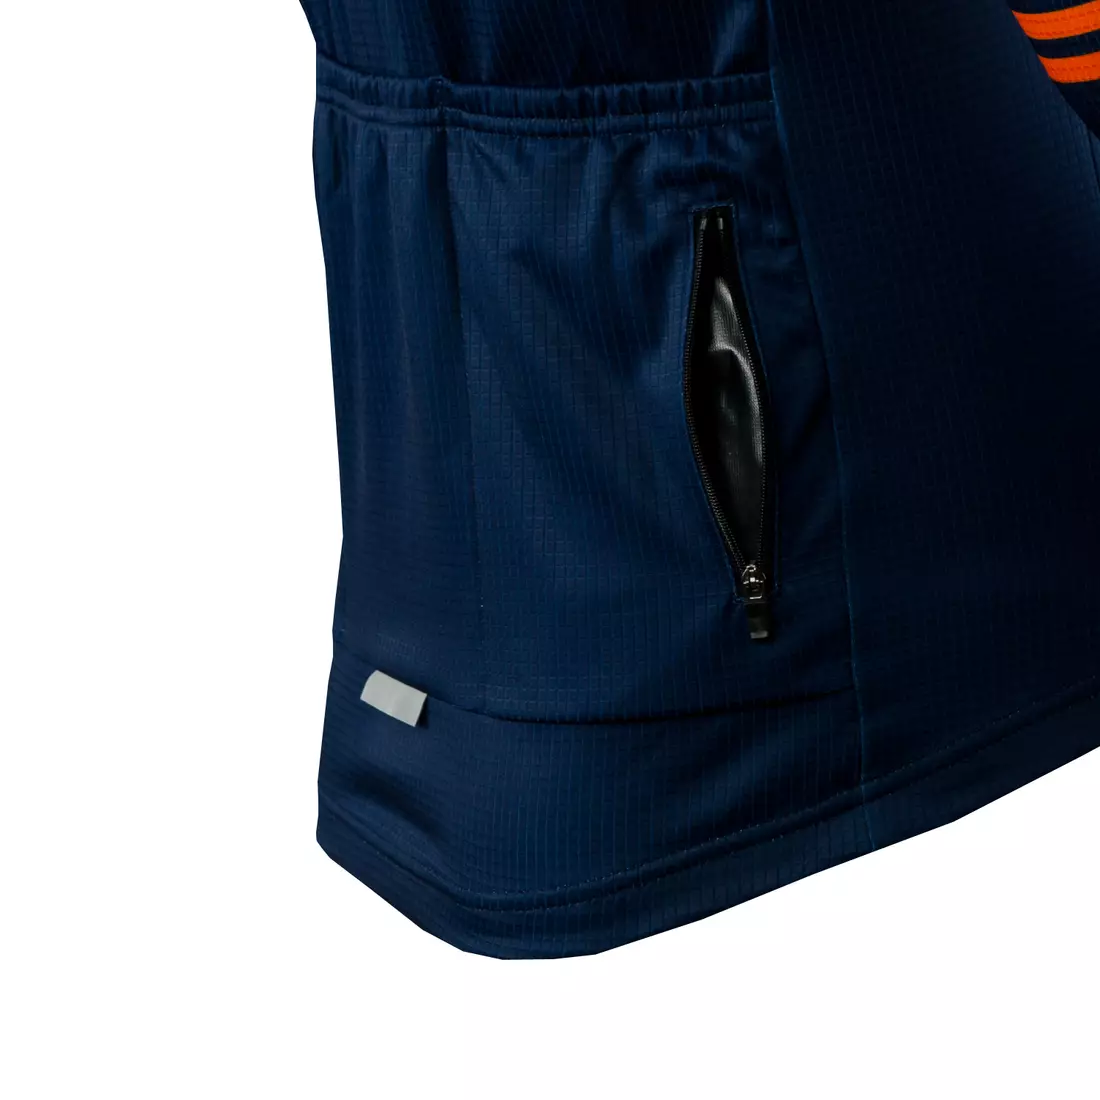 [Set] KAYMAQ DESIGN M66 hanorac de ciclism pentru bărbați albastru marin + KAYMAQ M66 RACE tricou de bărbați cu mânecă scurtă pentru ciclism, portocale